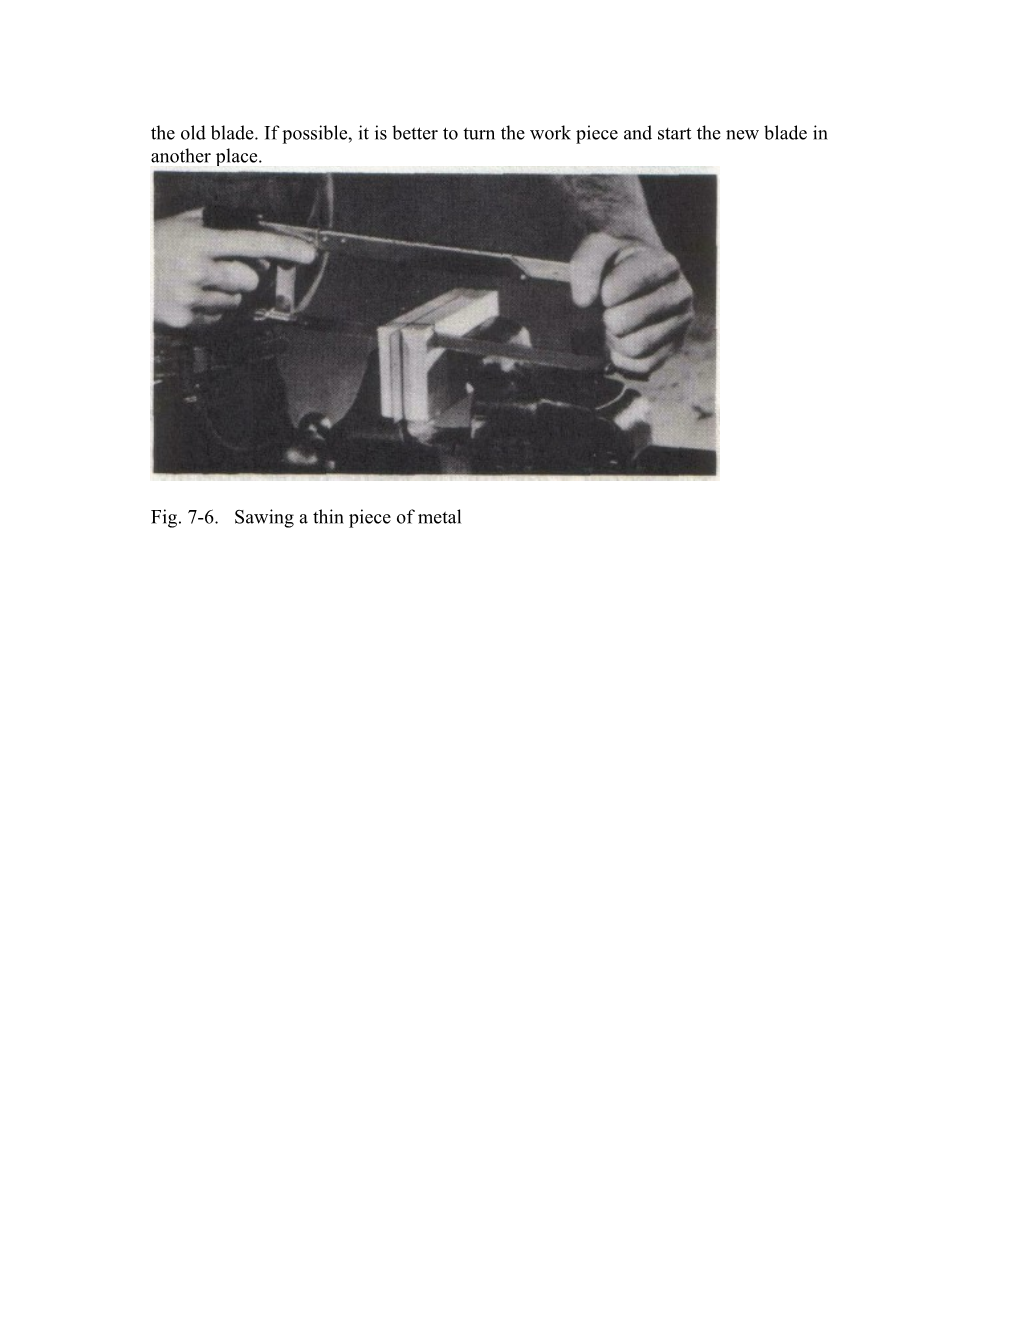 Fig. 7-5. Parts of a Pistol-Grip Adjustable Hacksaw